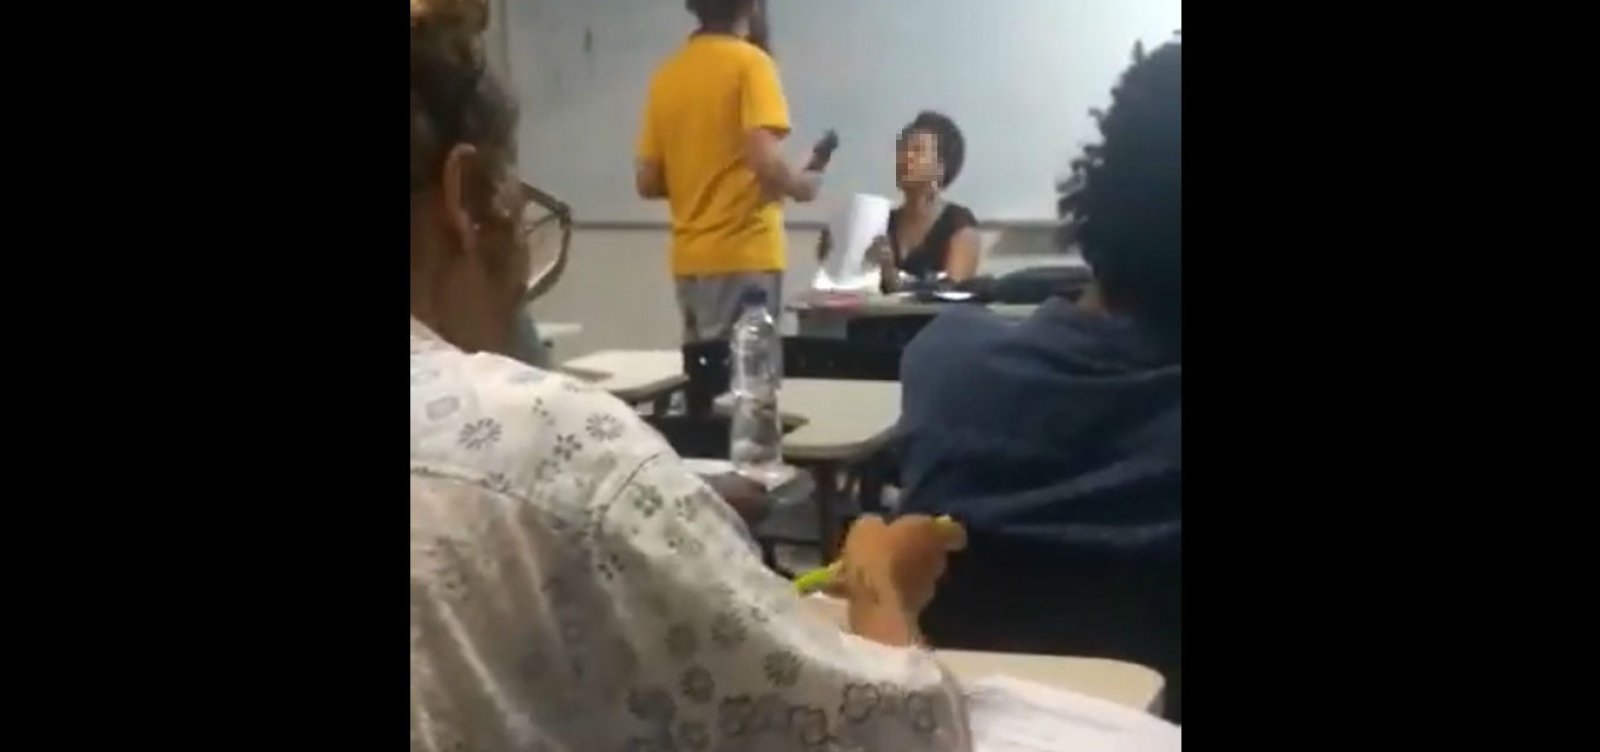 UFRB: Aluno denunciado por racismo tentou entrar na universidade através de cotas raciais